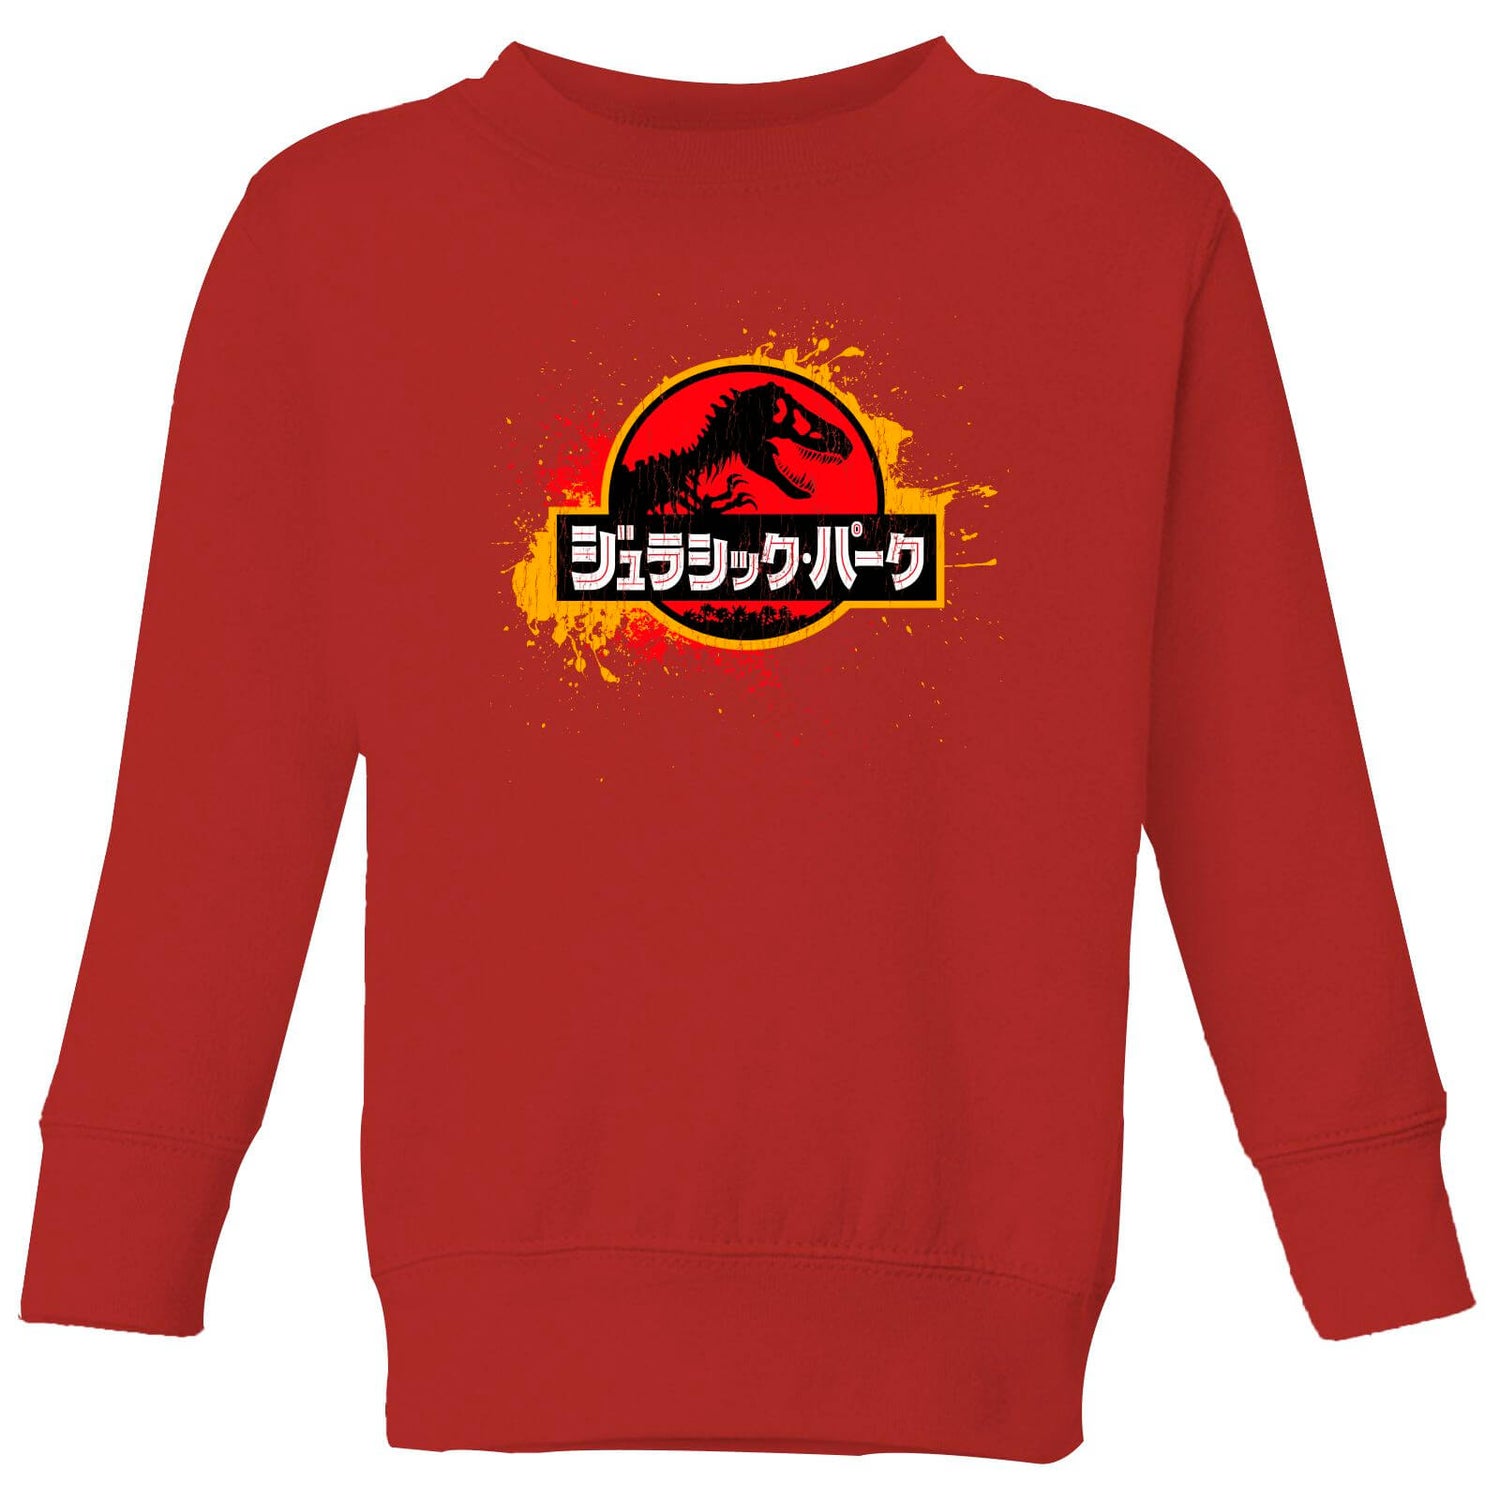 Jurassic Park Kids' Sweatshirt - Red